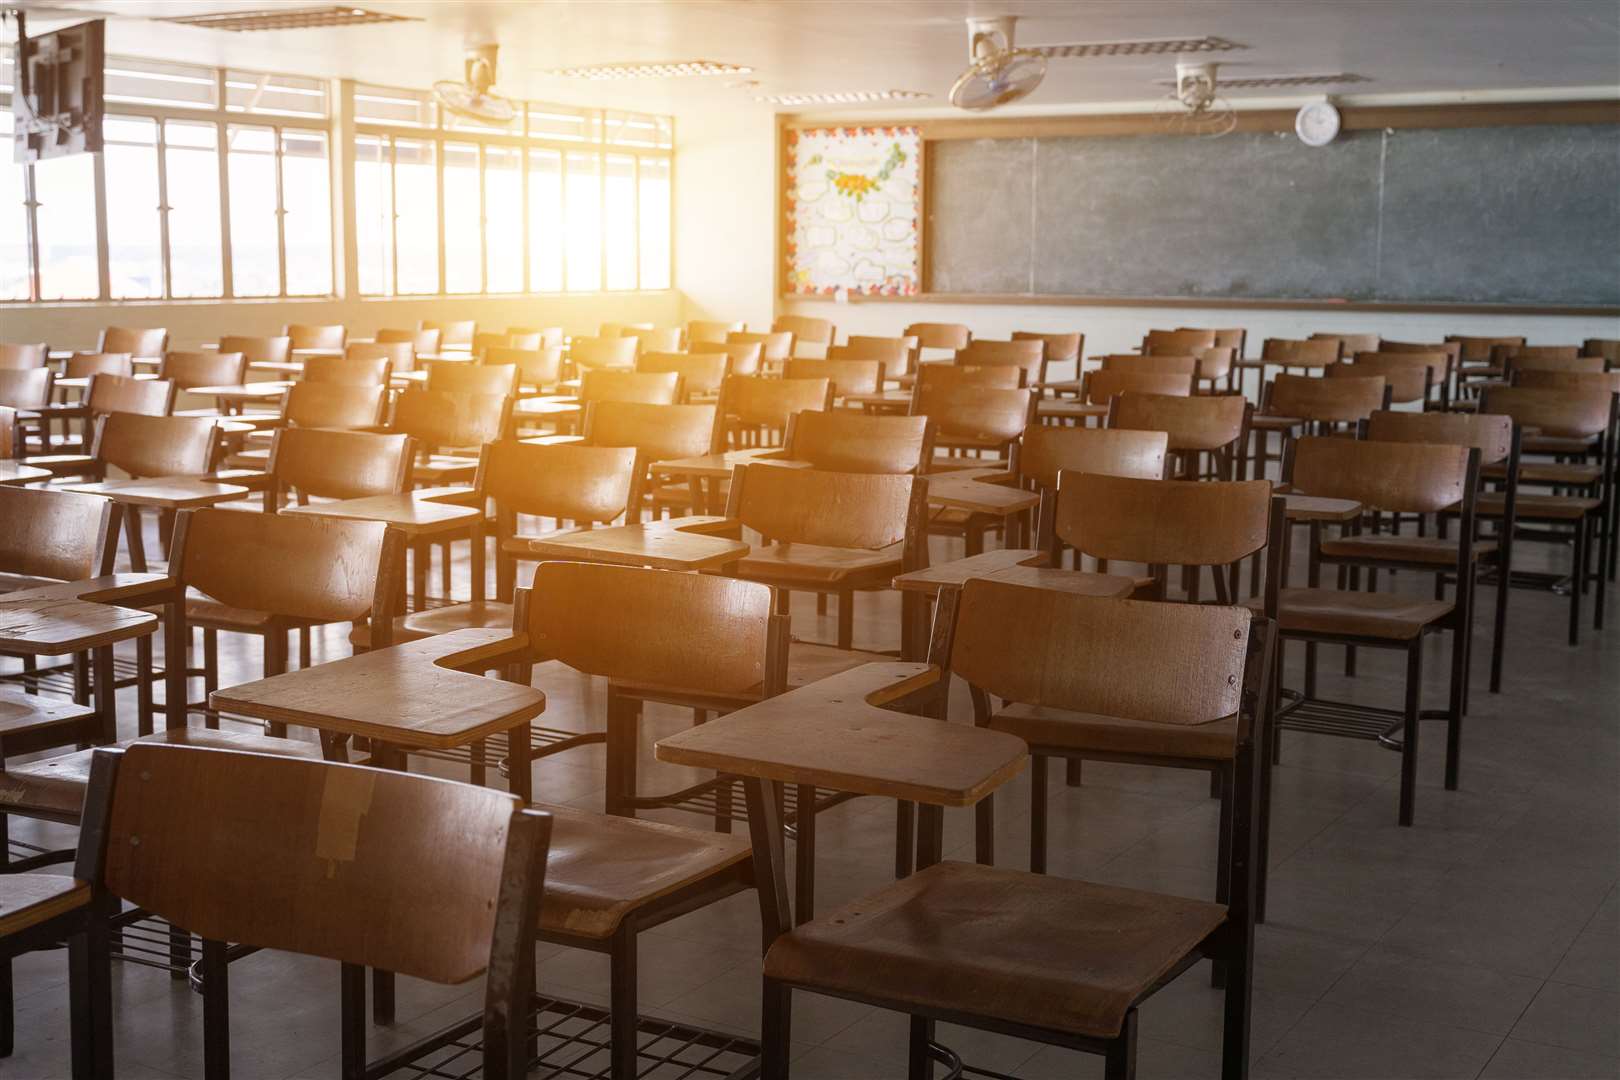 Empty classroom.